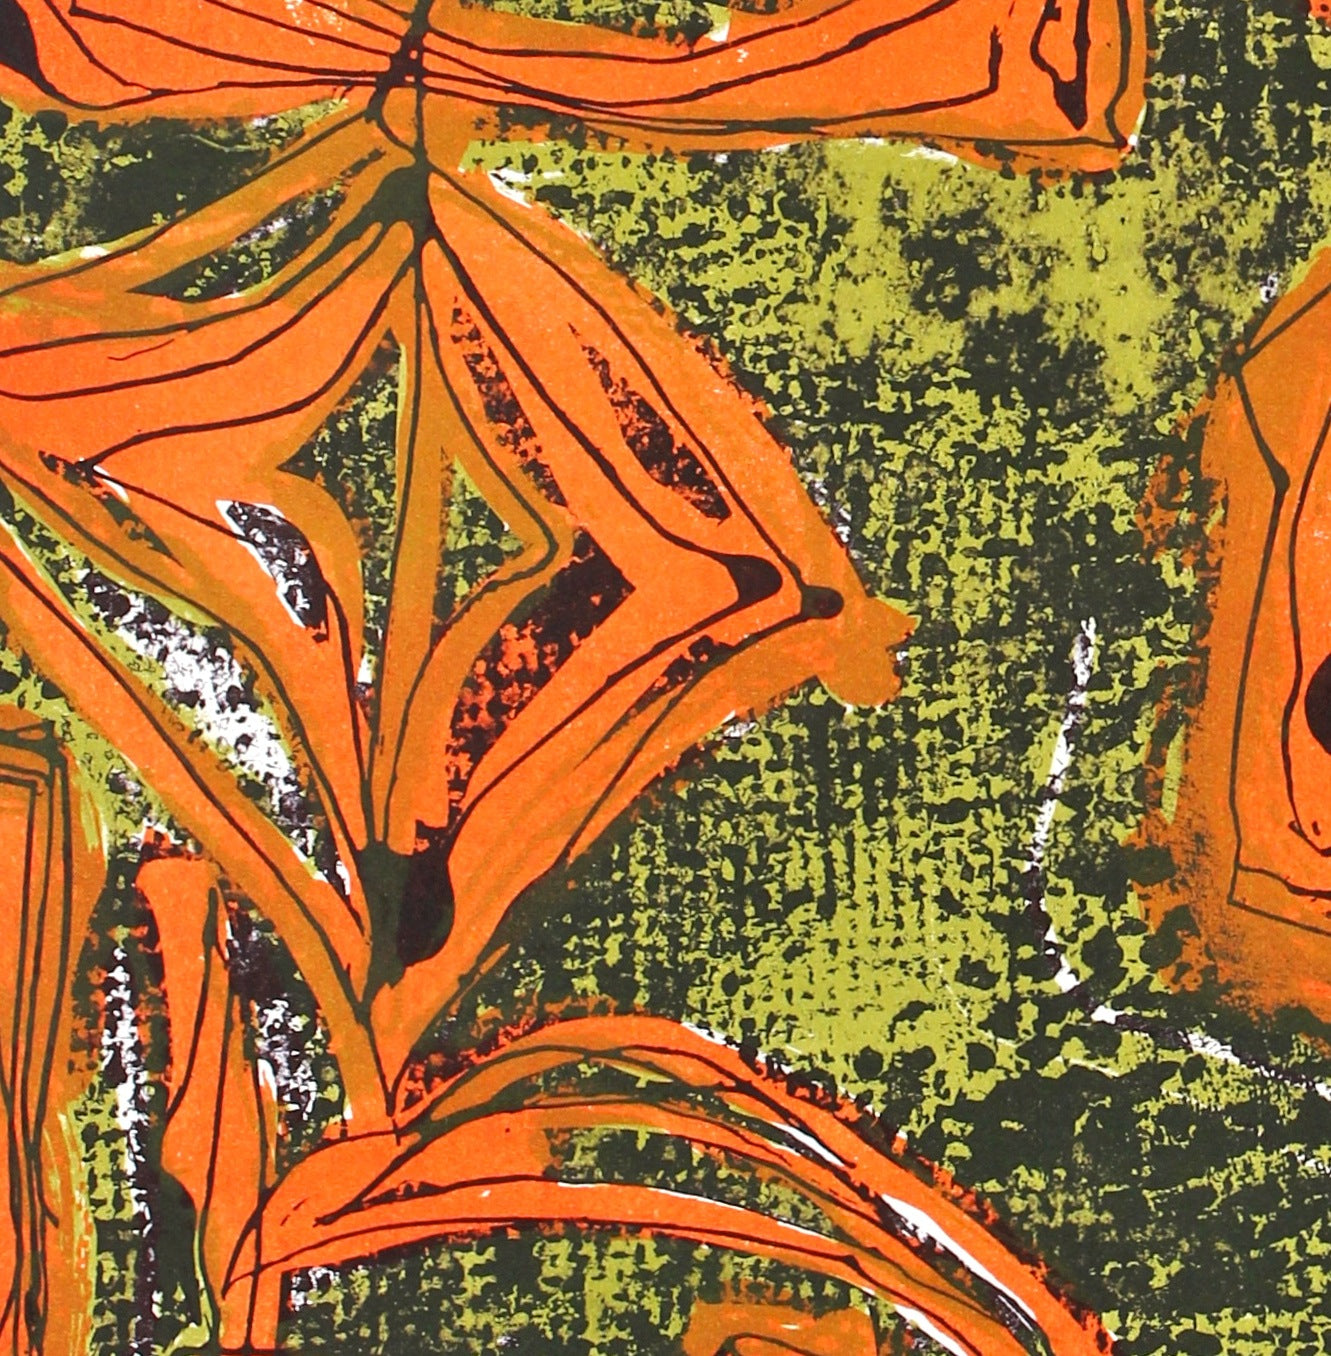 Green & Orange Organic Forms<br>1940-50s Stone Lithograph<br><br>#40755